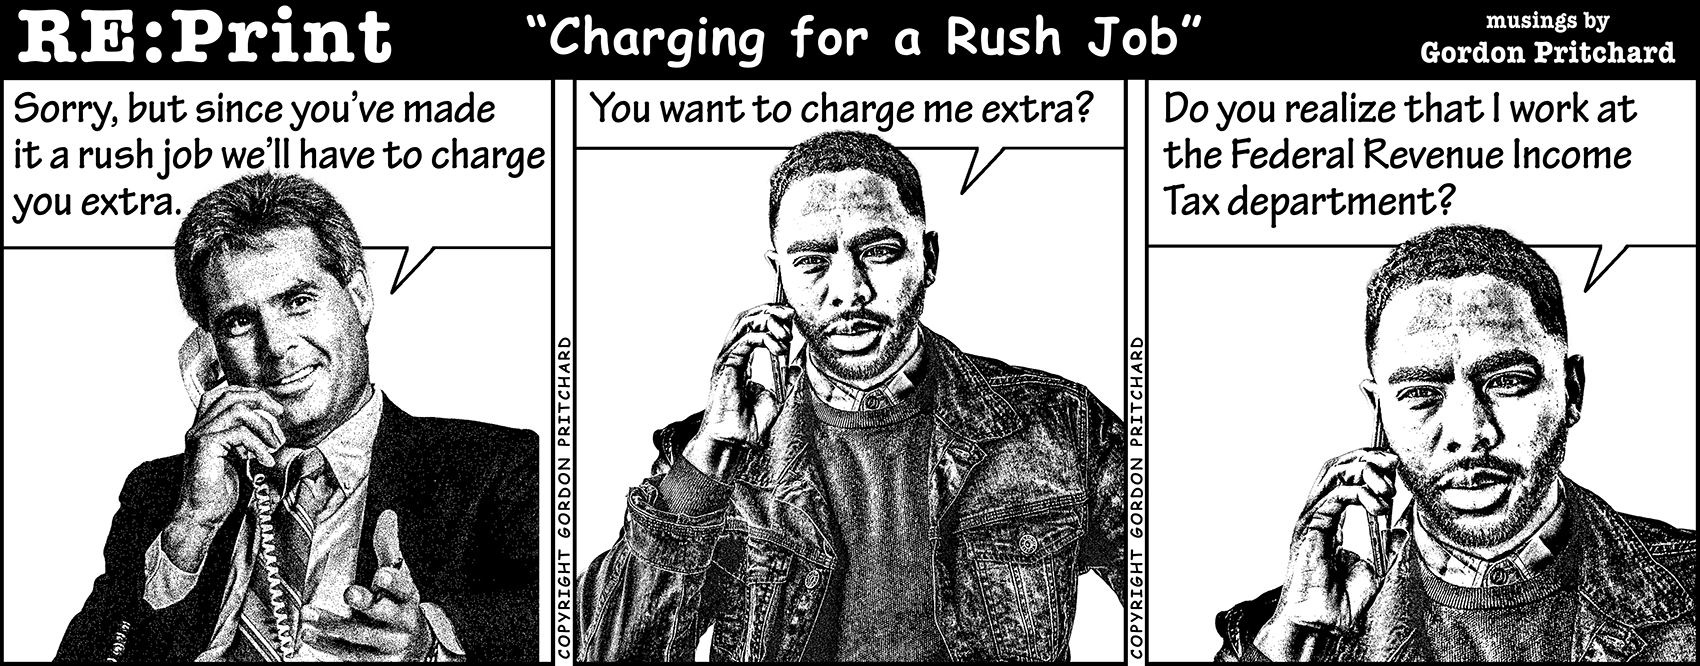 701 Charging for a Rush Job.jpg